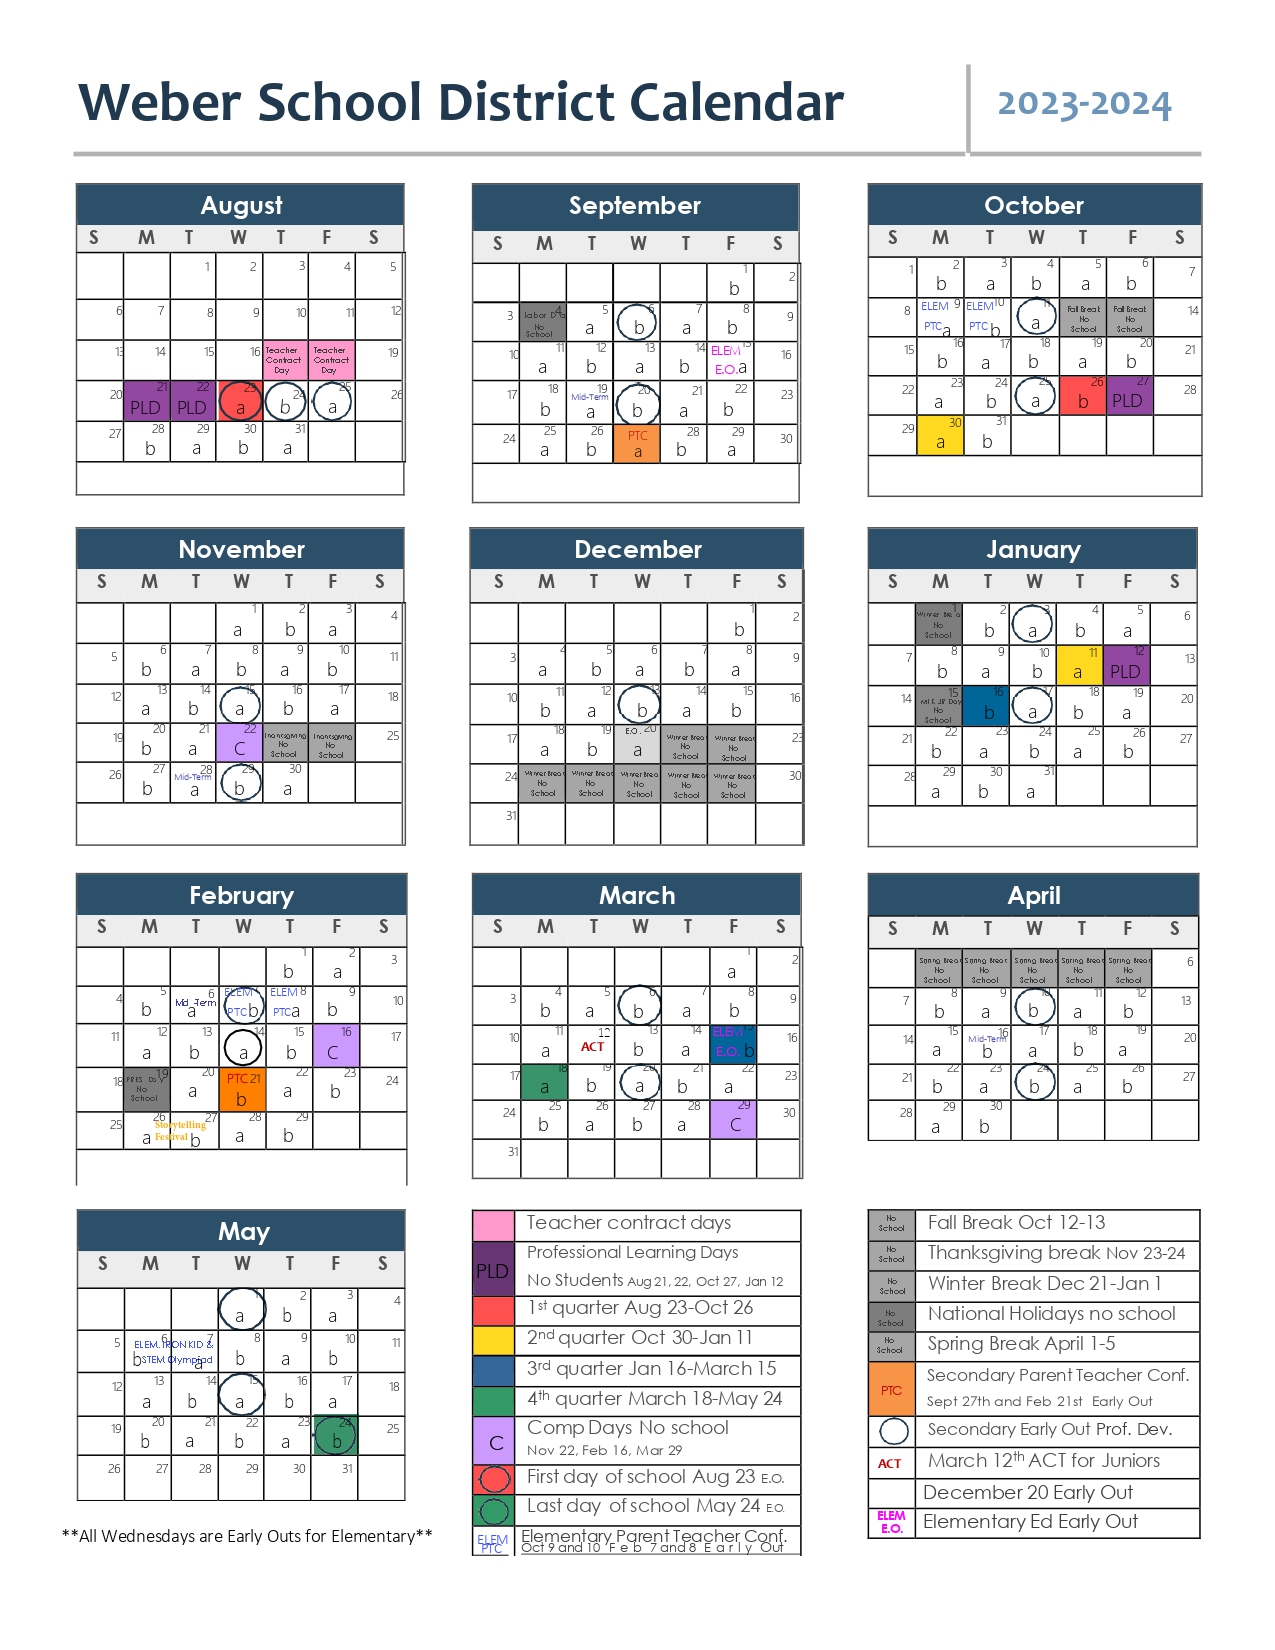 District Calendar 23 24 updated 